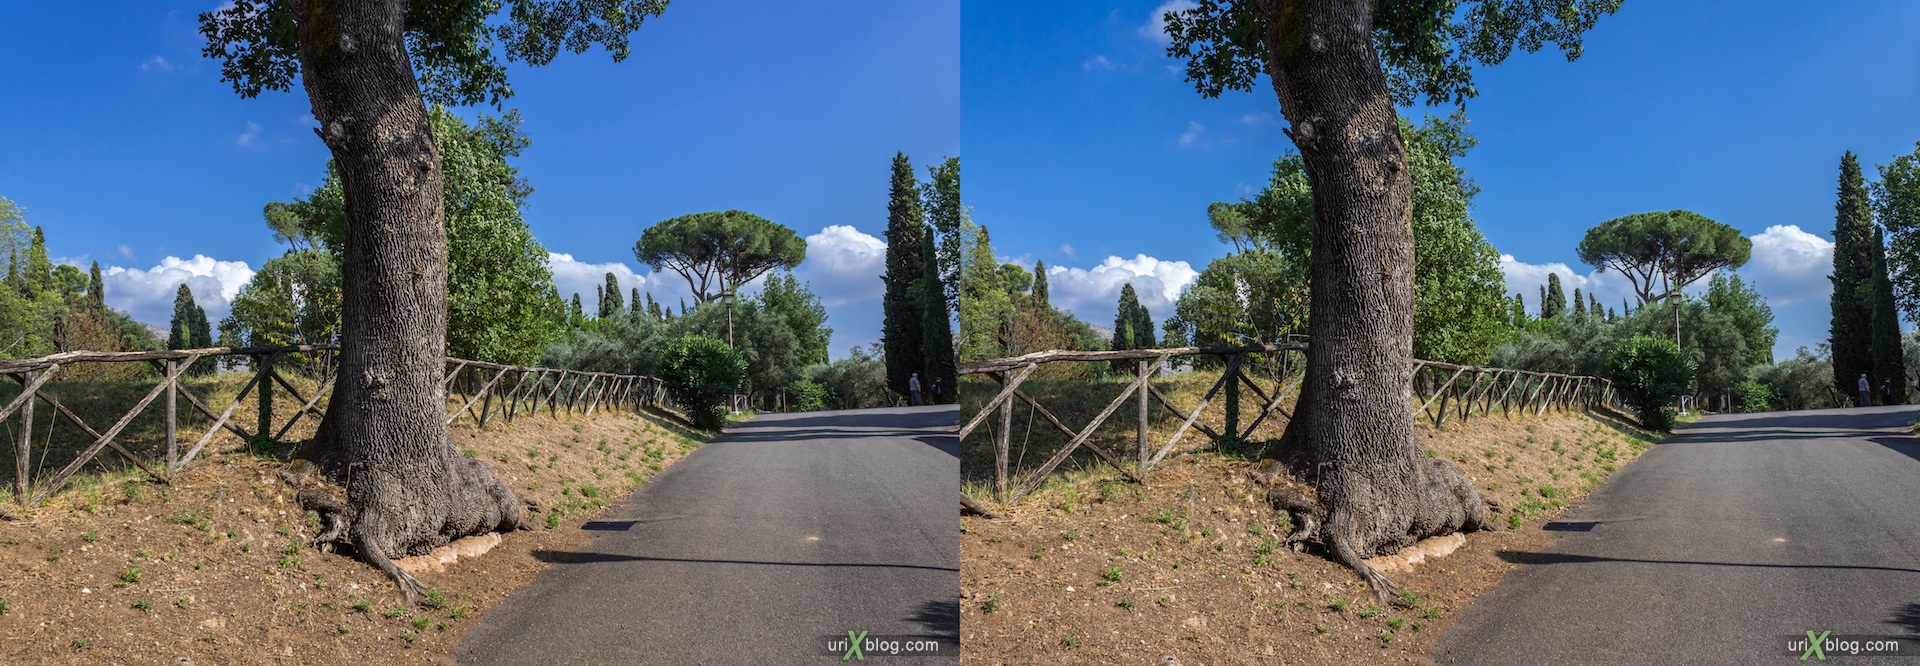 2012, Villa Adriana, Italy, Tivoli, Ancient Rome, 3D, stereo pair, cross-eyed, crossview, cross view stereo pair